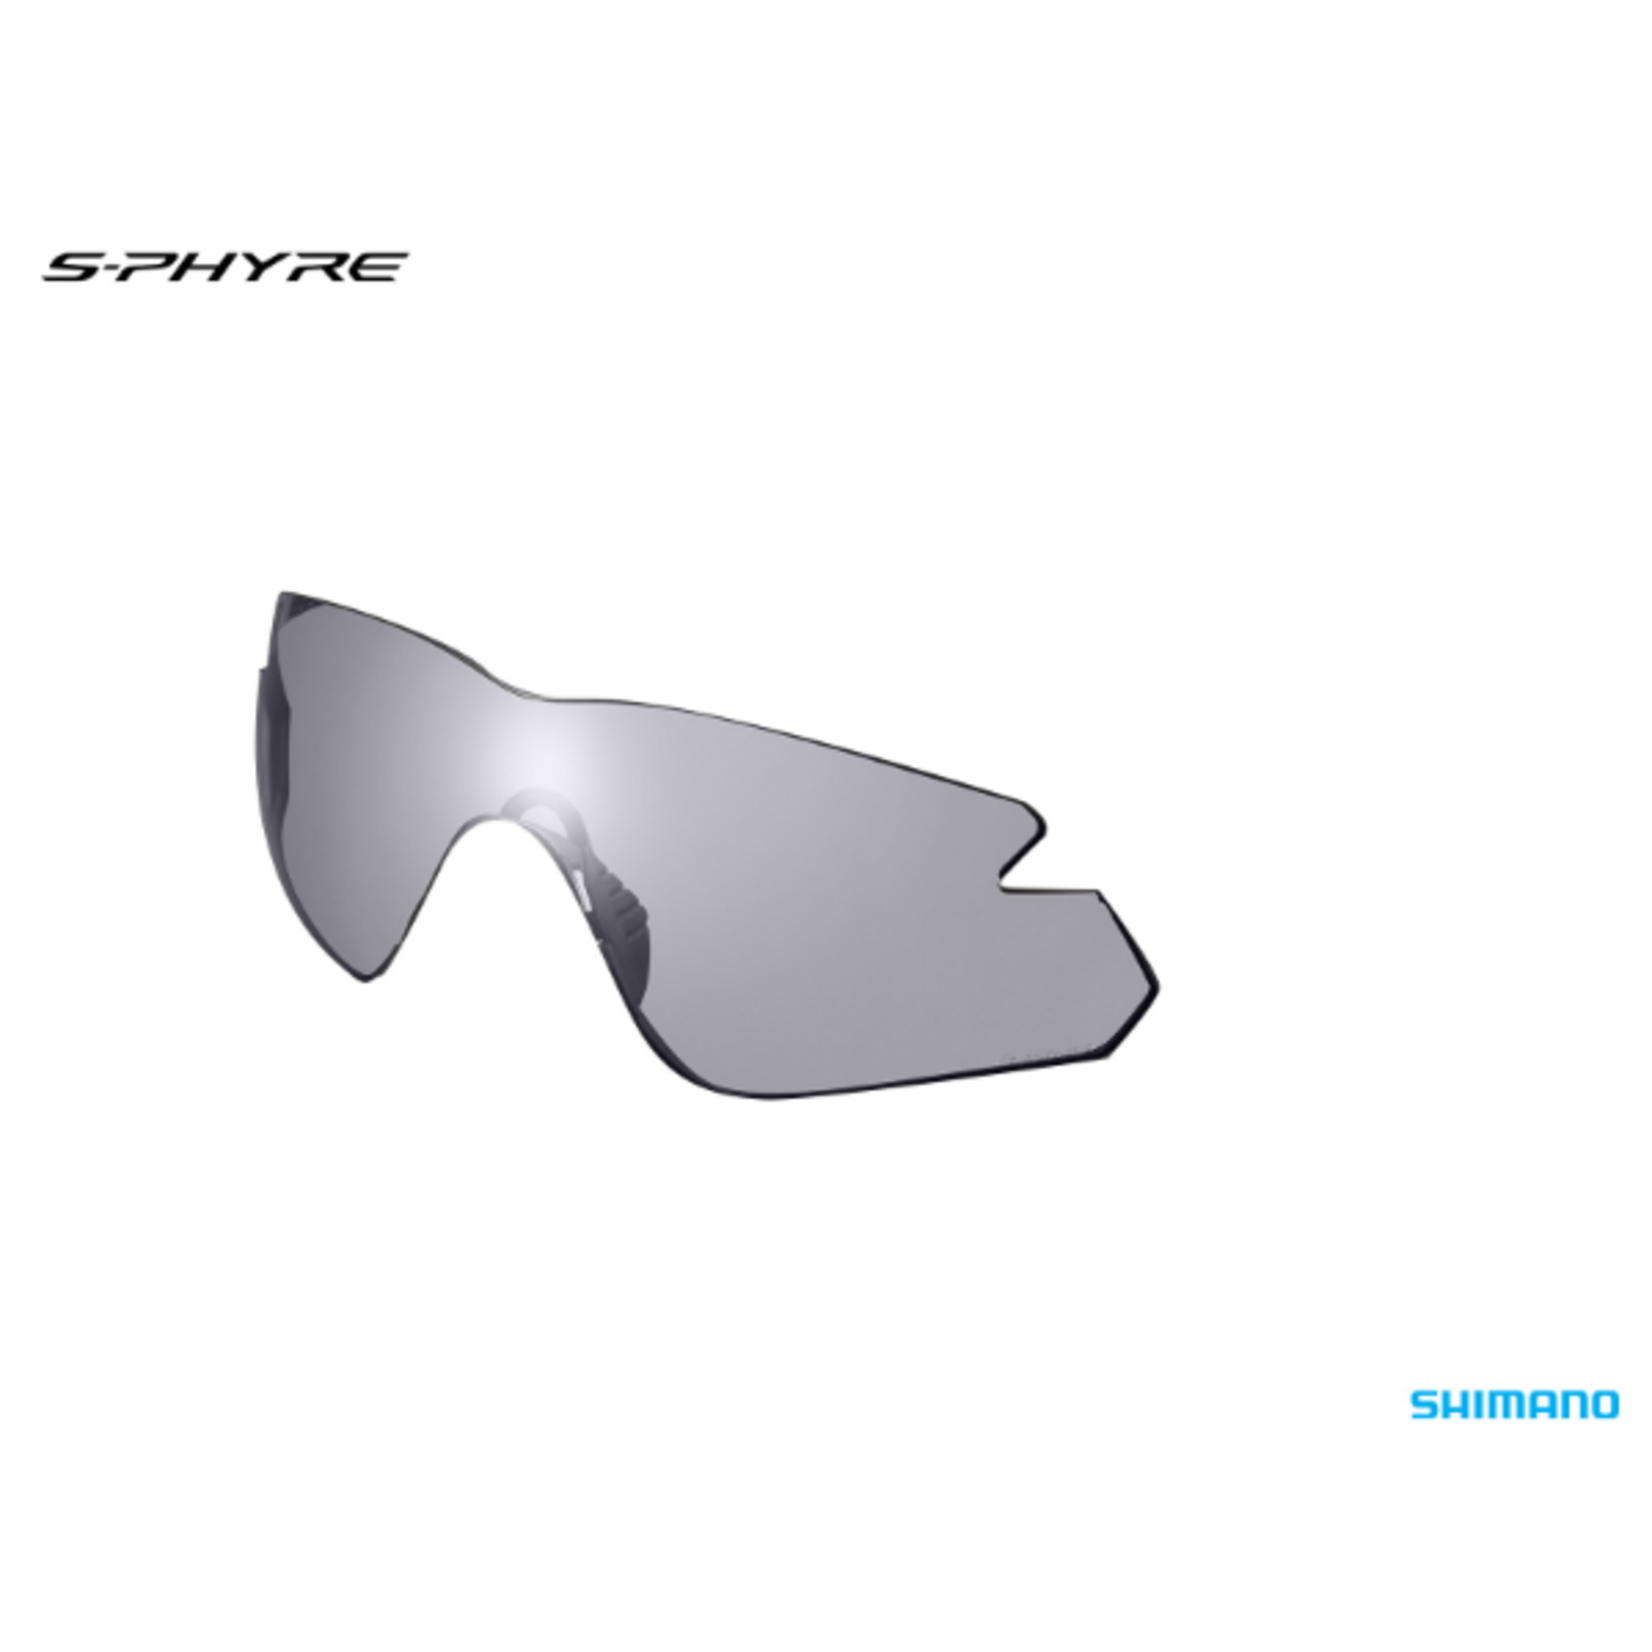 Shimano Shimano Eyewear Spare Lens - S-Phyre X Sphx1 - Photochromic D Gray